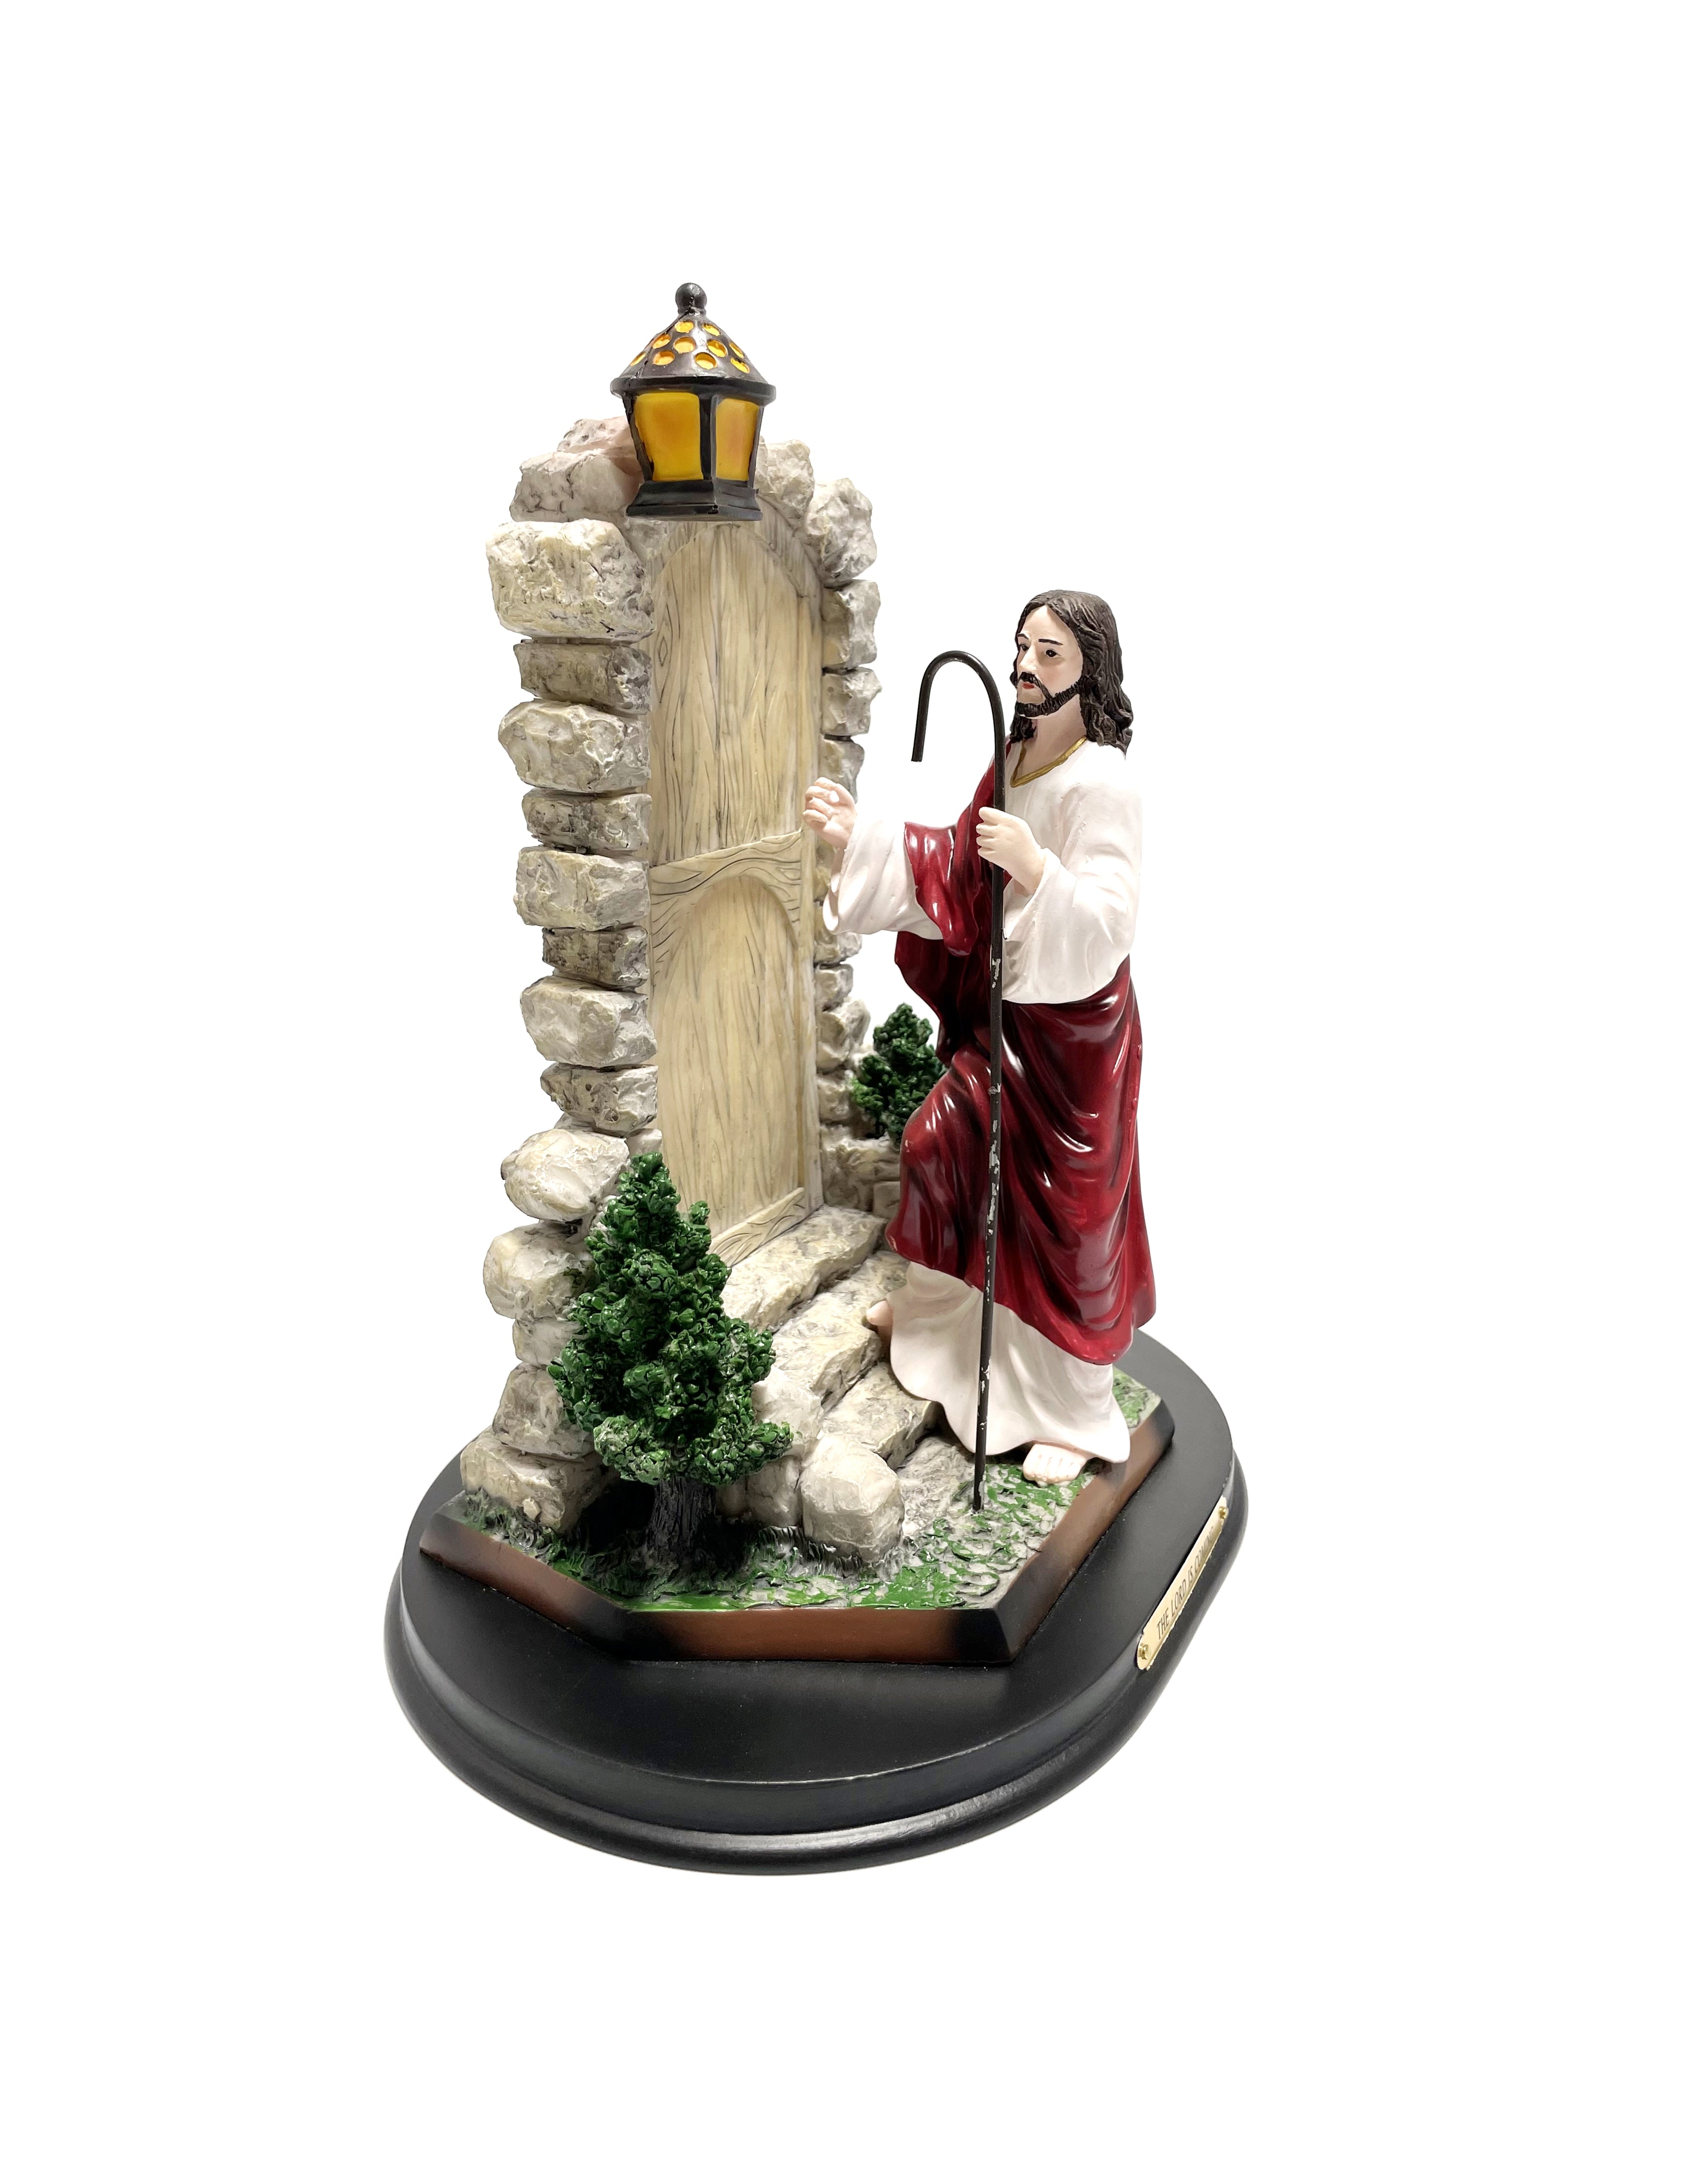 Religious statue of Jesus knocking on the door 12" height